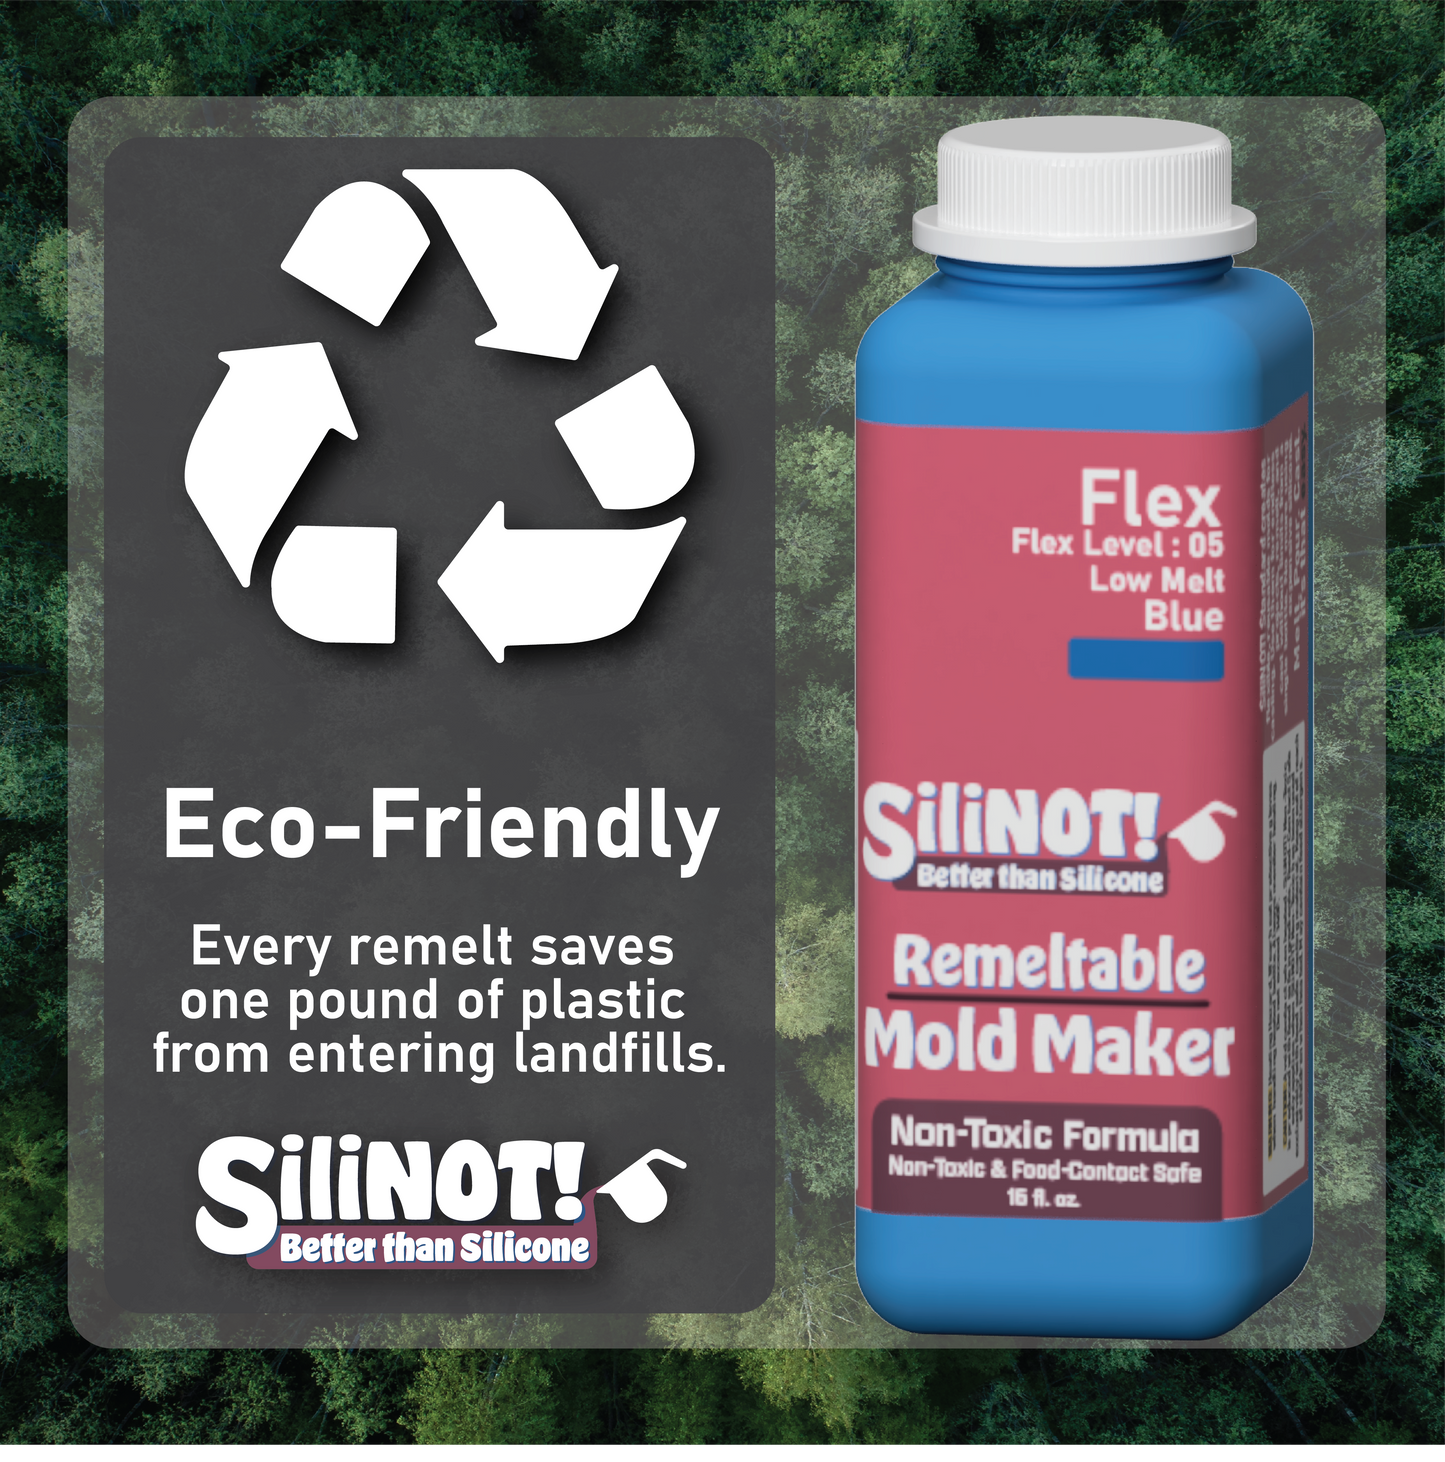 Non-Toxic | Remeltable Eco-Friendly Mold Maker